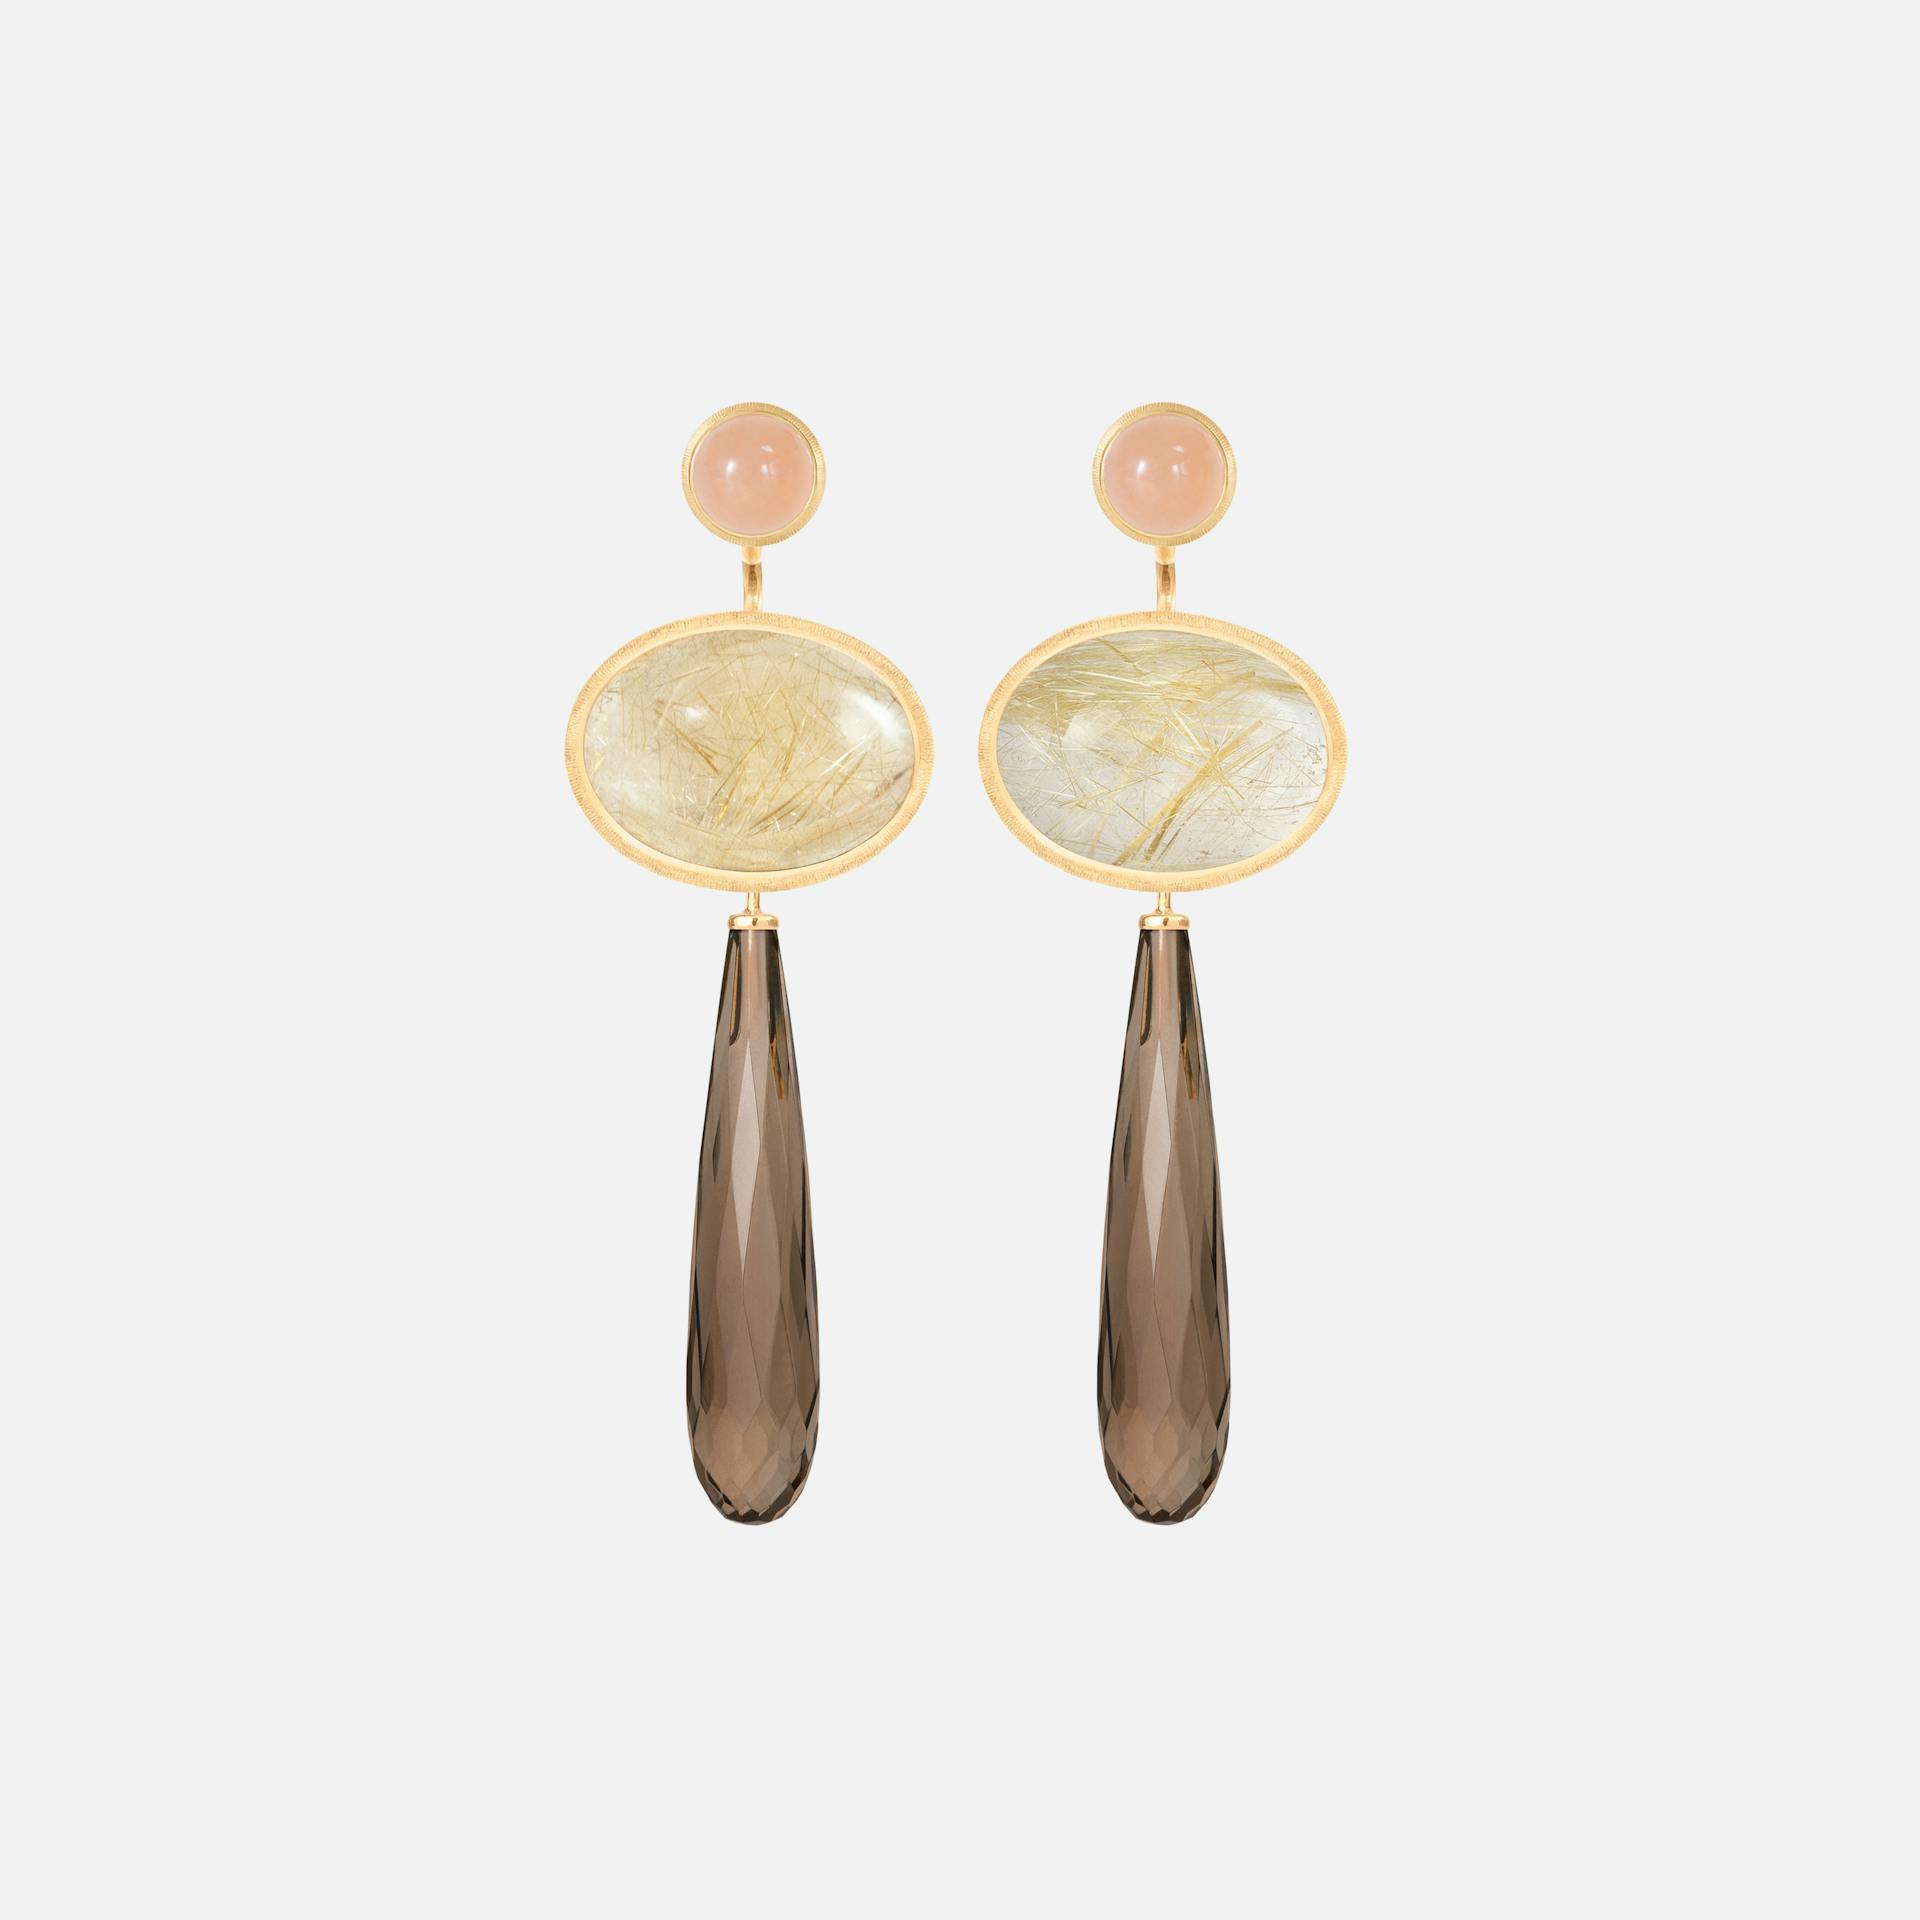 Earring pendant drop 18k gold with smoky quartz